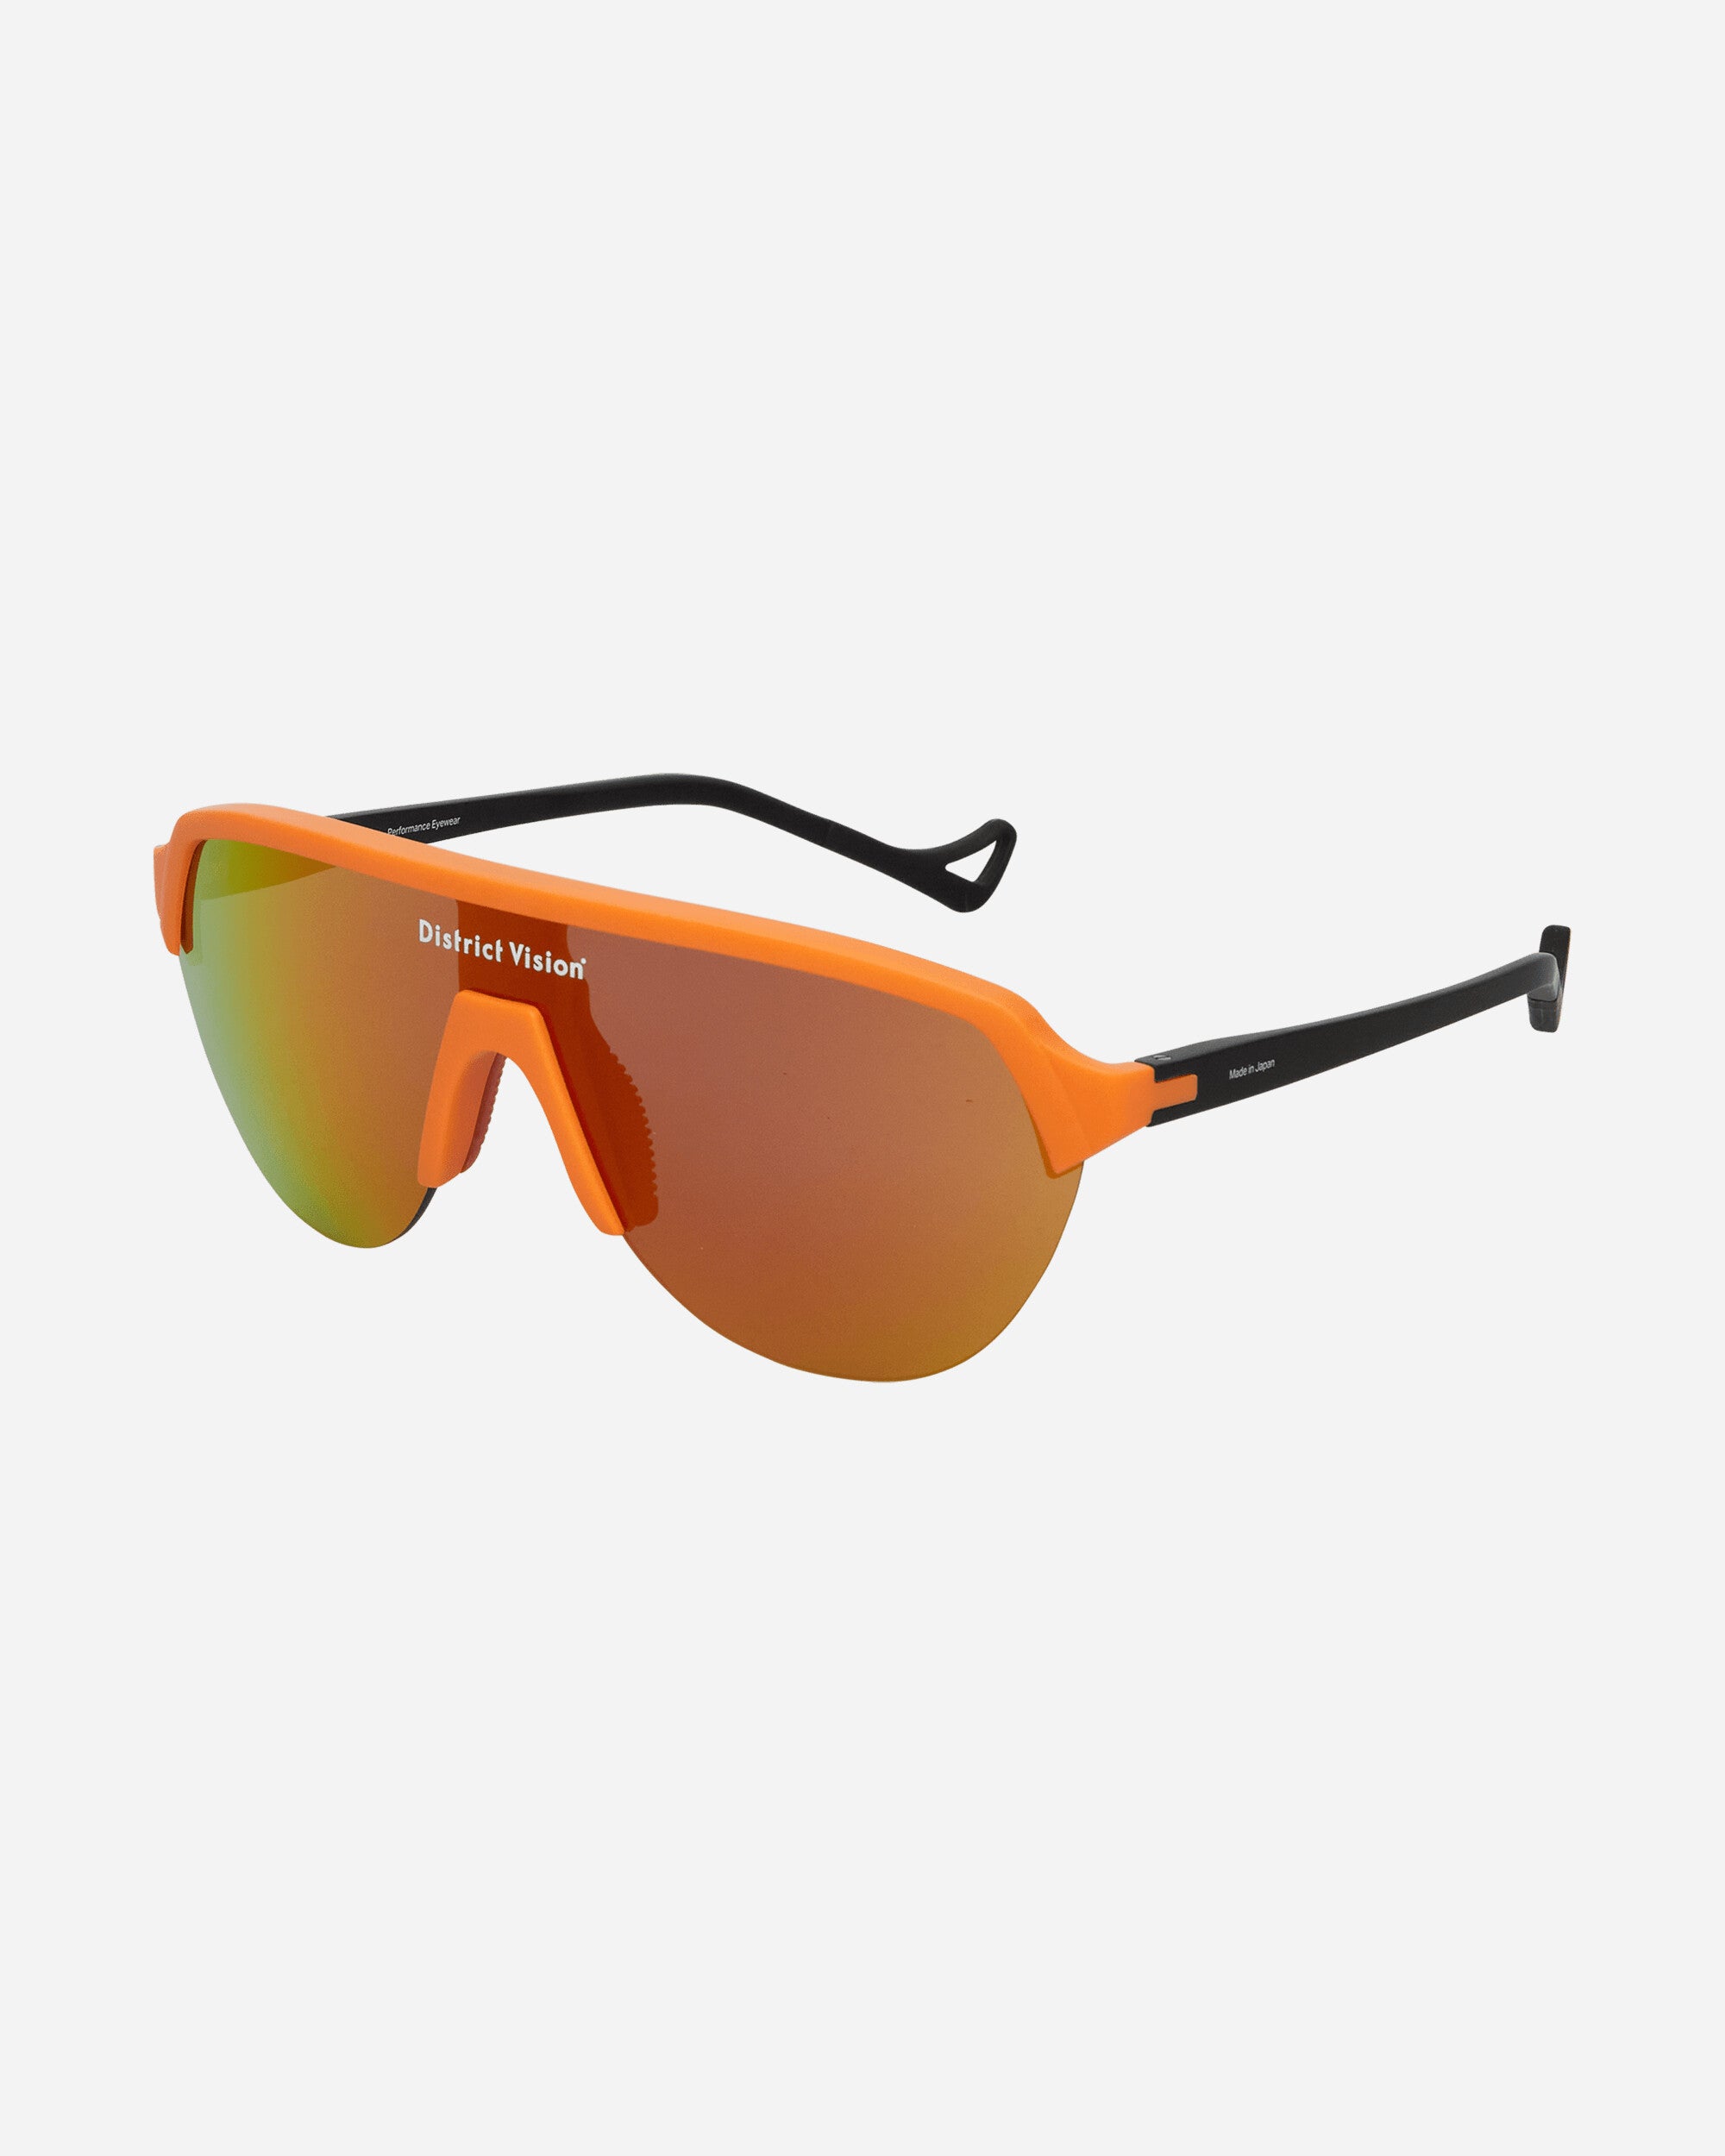 Nagata Speed Blade Sunglasses Infrared